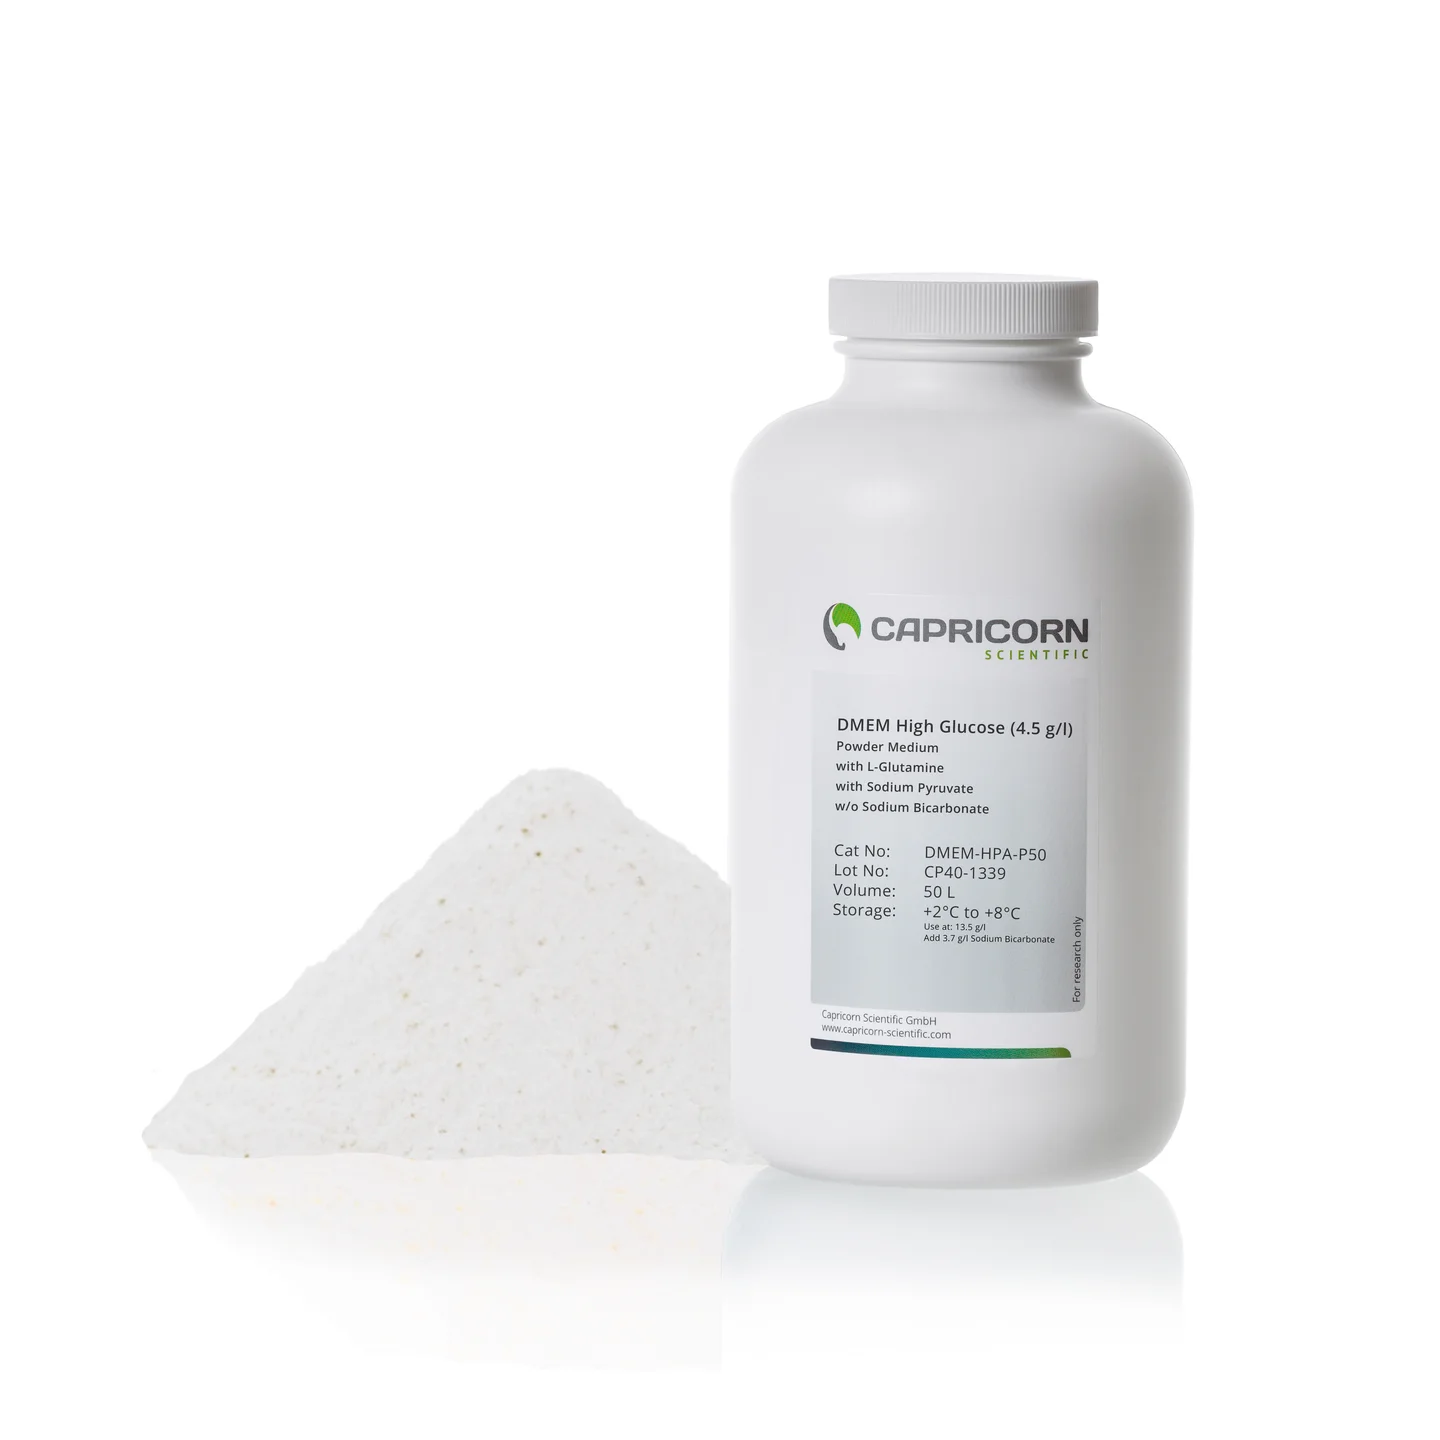 DMEM High Glucose (4.5 g/l) Powder Medium, 50 L, with L-Glutamine, with Sodium Pyruvate, without Sodium Bicarbonate